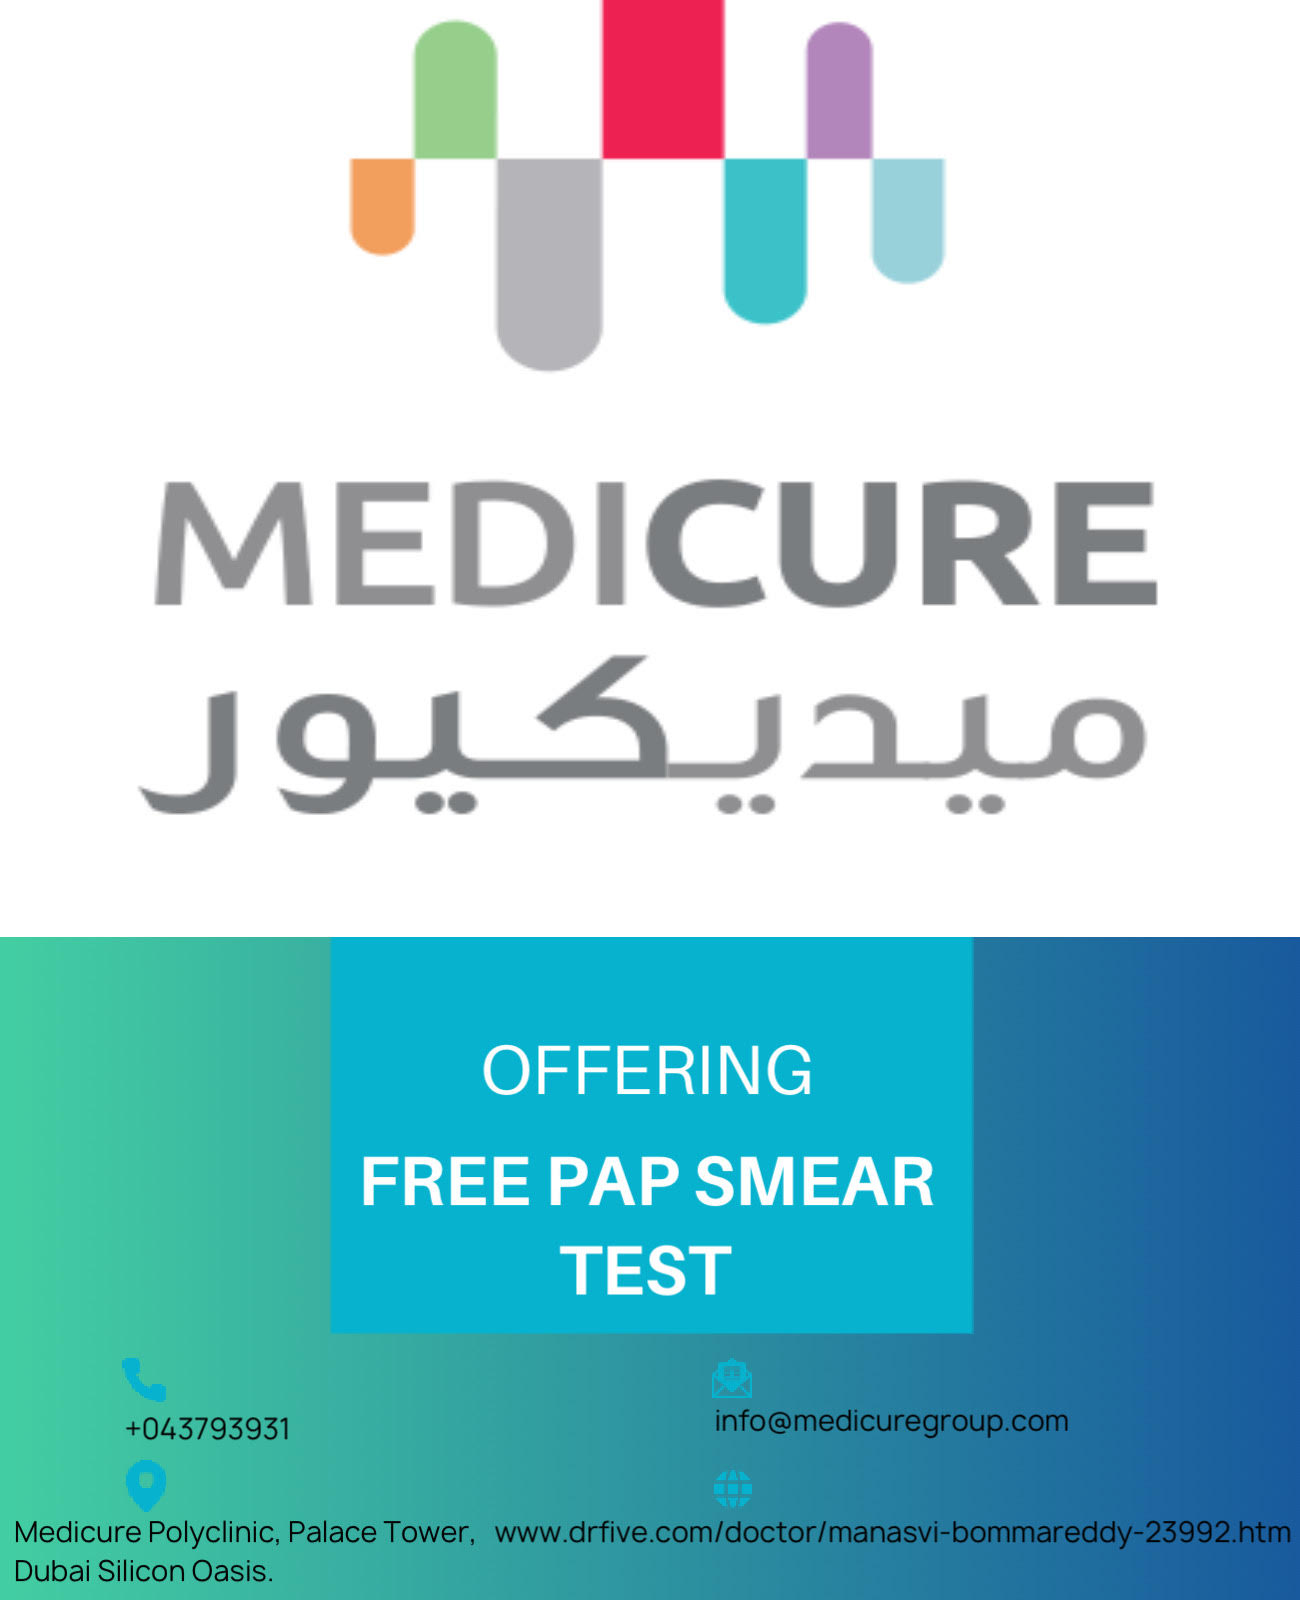 Medicure Polyclinic Dubai Silicon Oasis